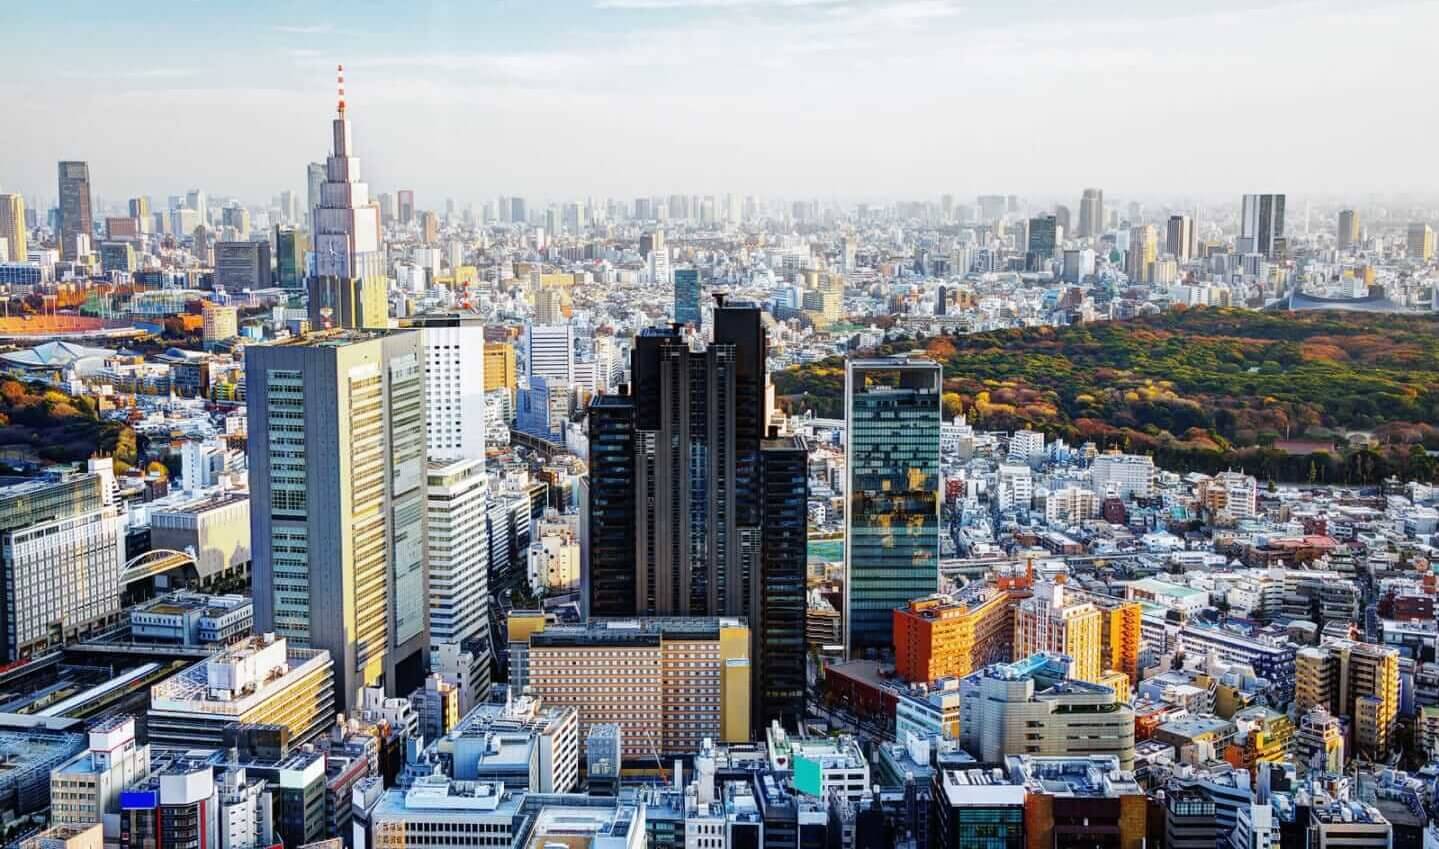 Skyline of the Shinjuku district in Tokyo, Japan